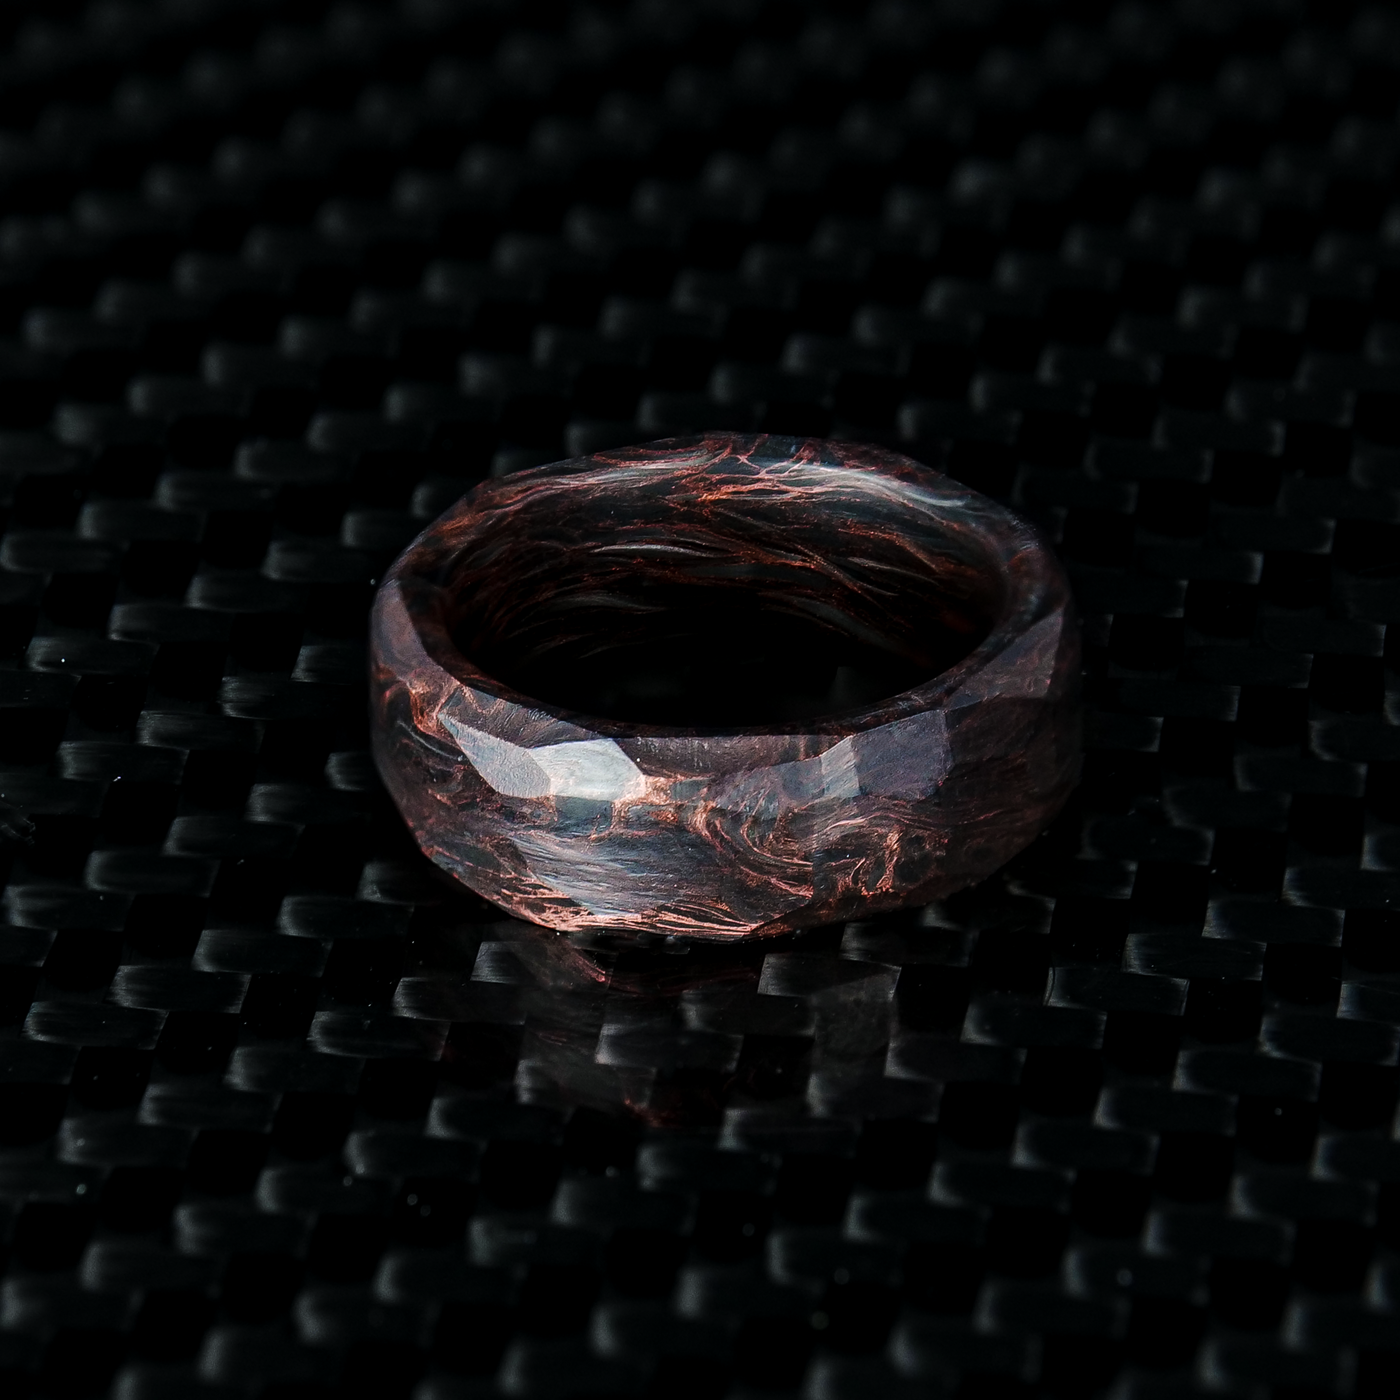 Obsidian Copper Burl Carbon Fiber Ring - Patrick Adair Designs